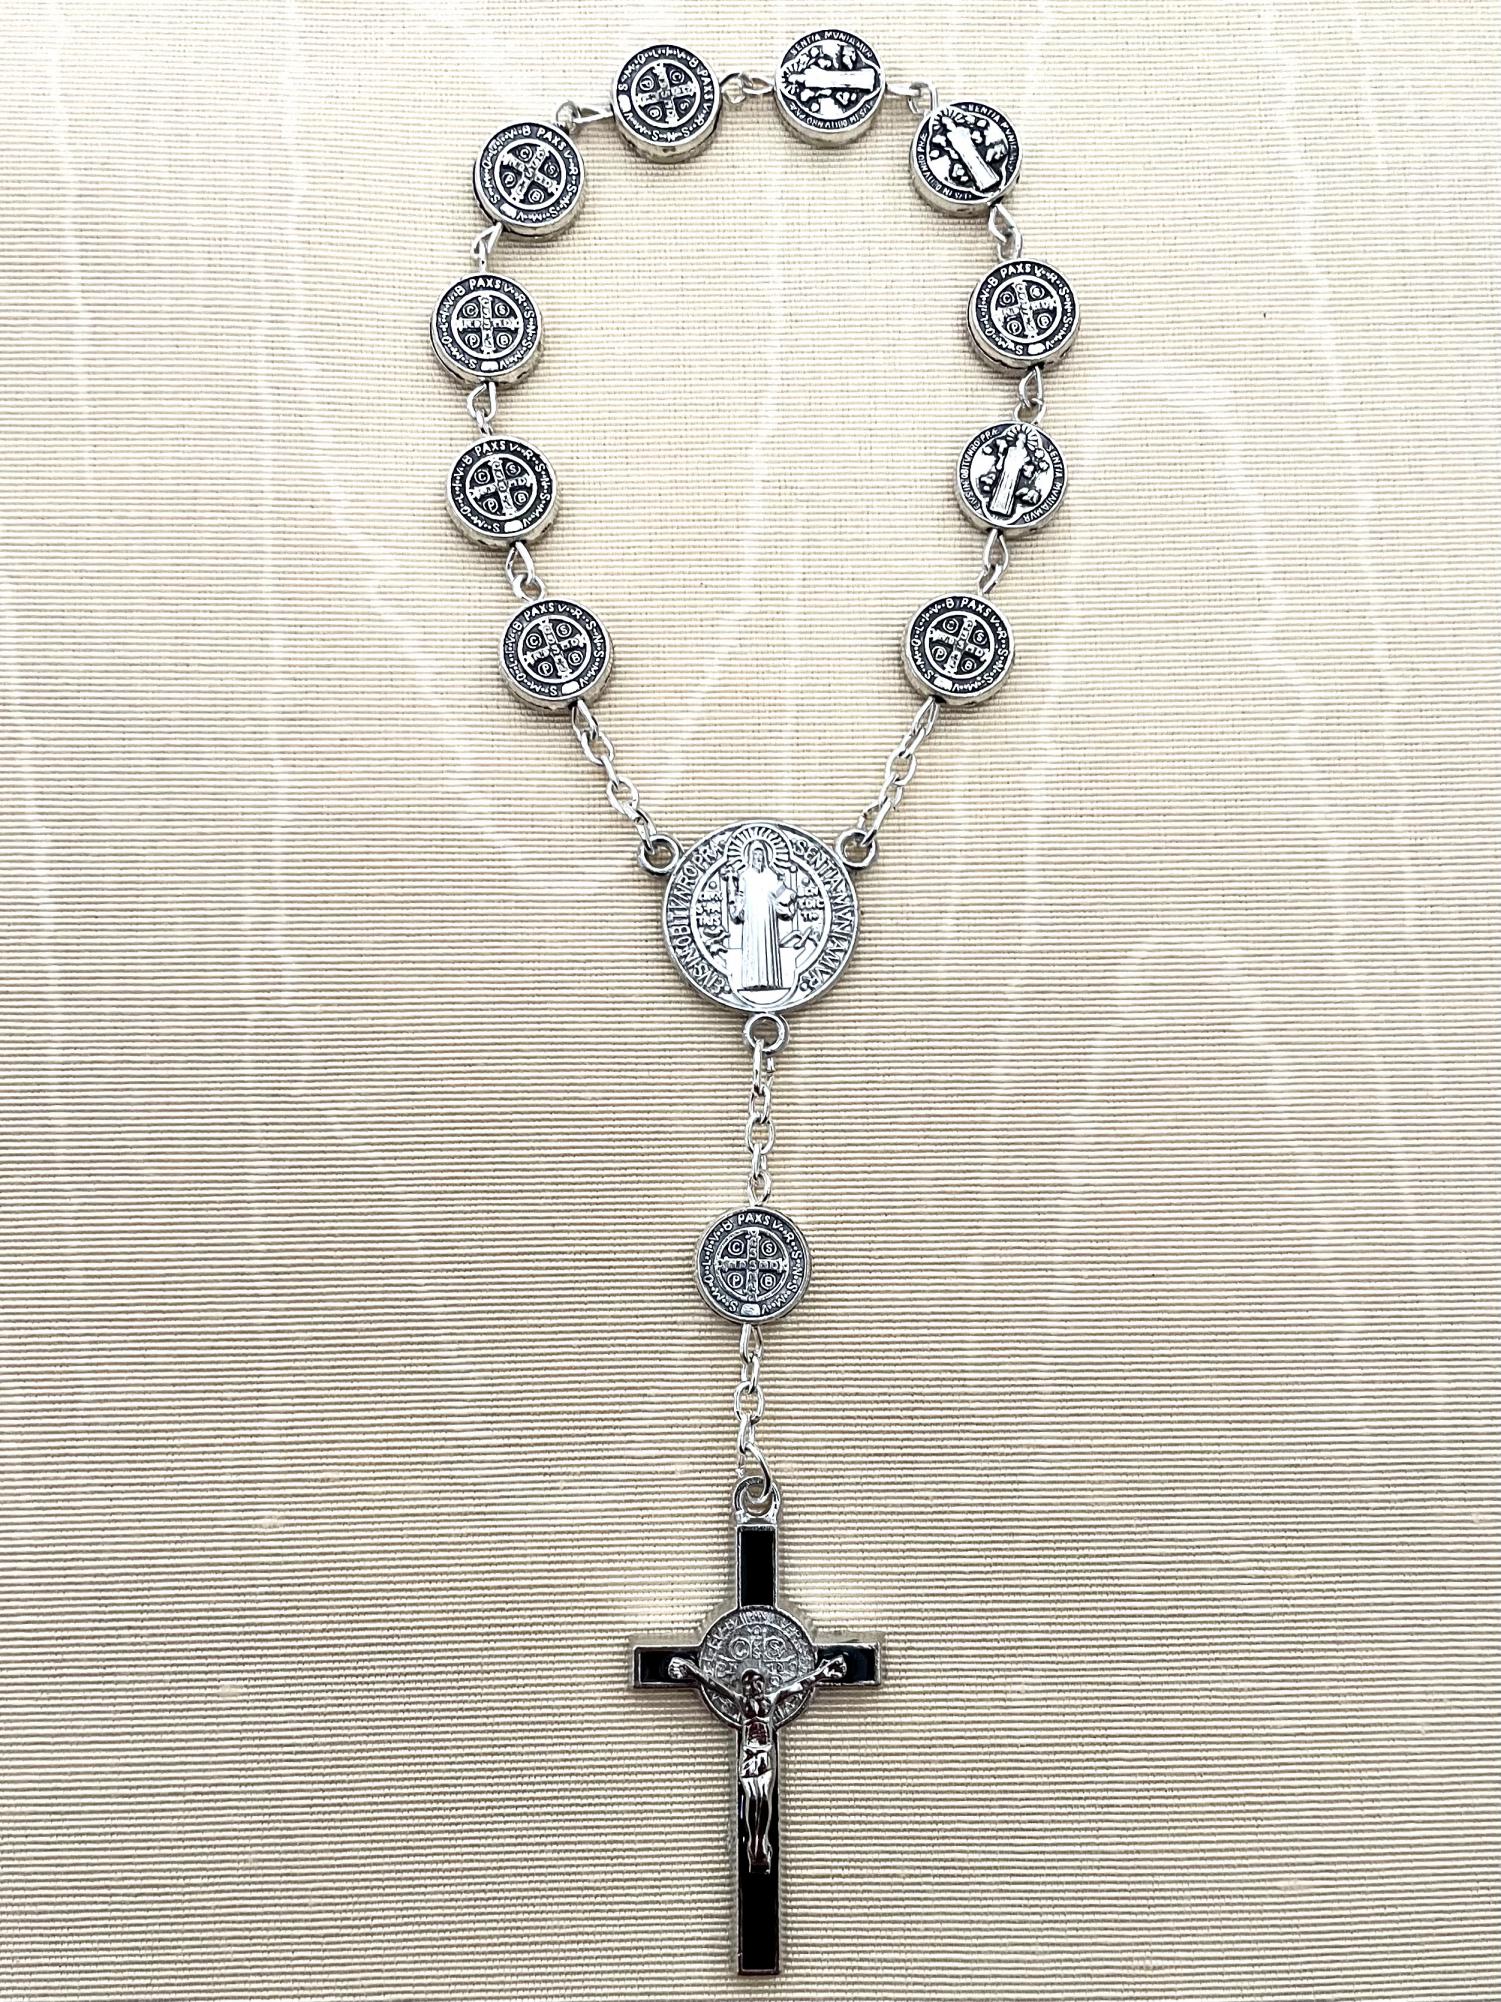 Saint Benedict Medal Rosary 1 Decade Rosary